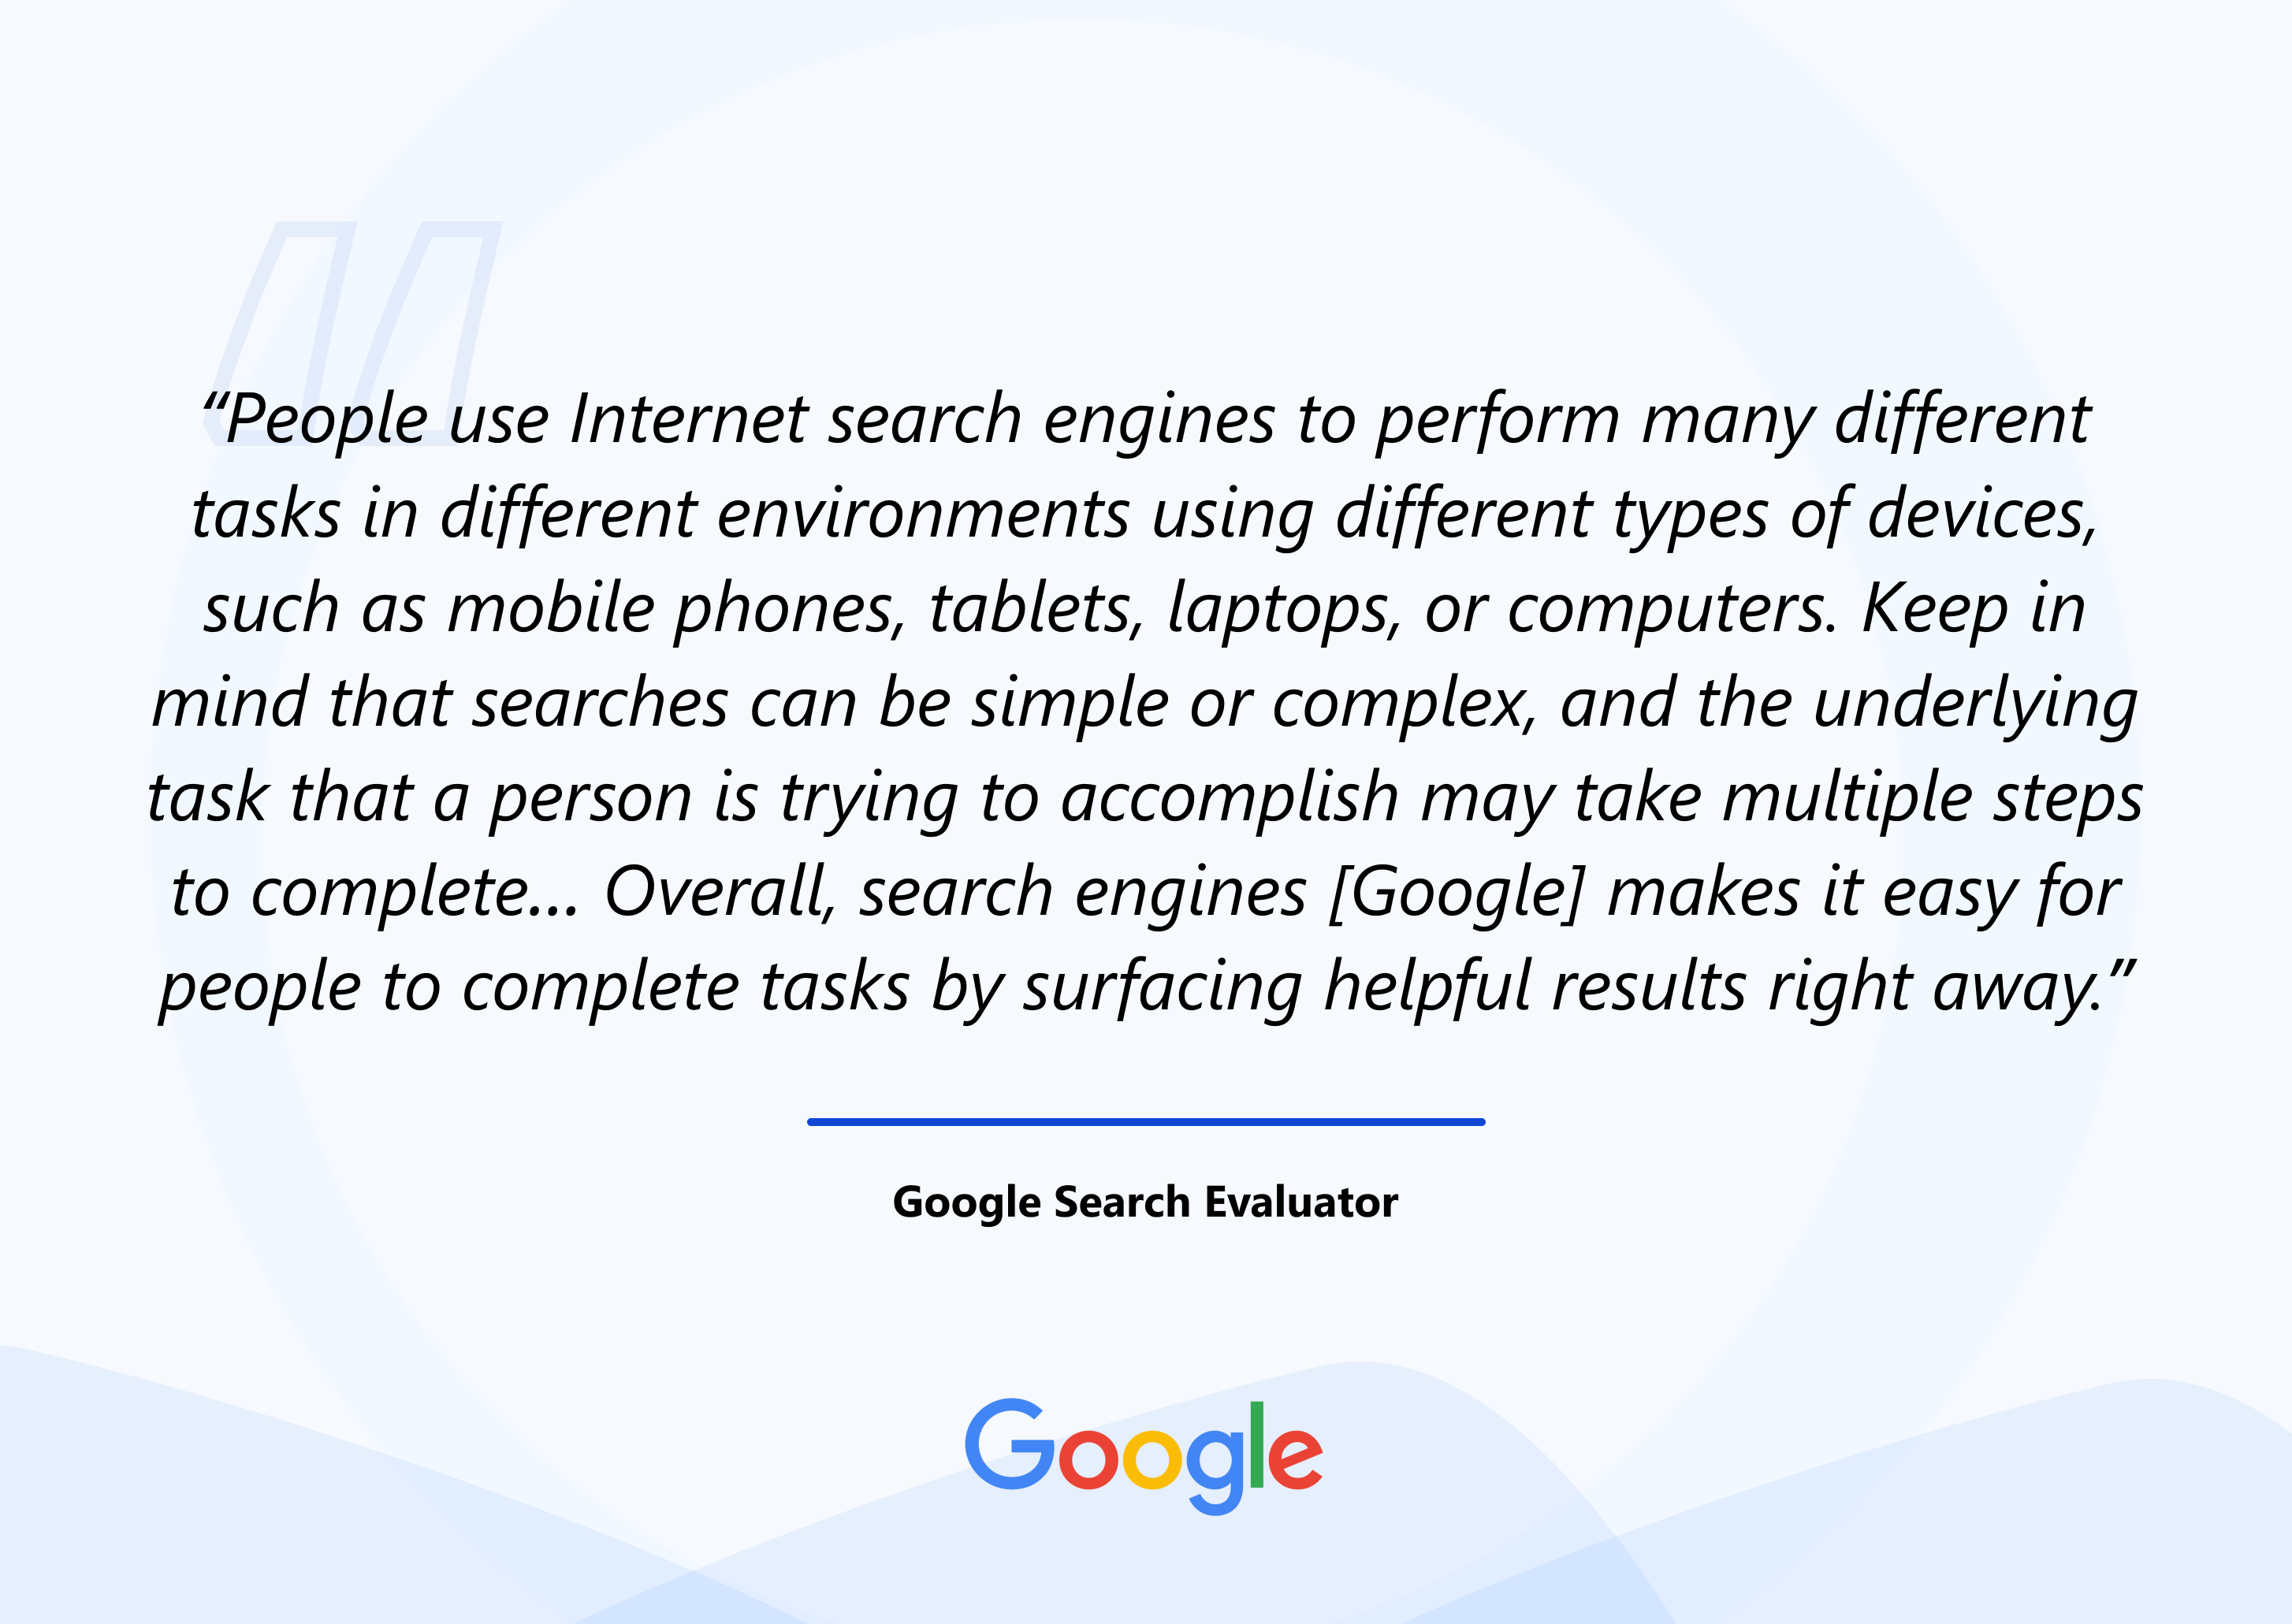 Google Search Evaluator's confirmation